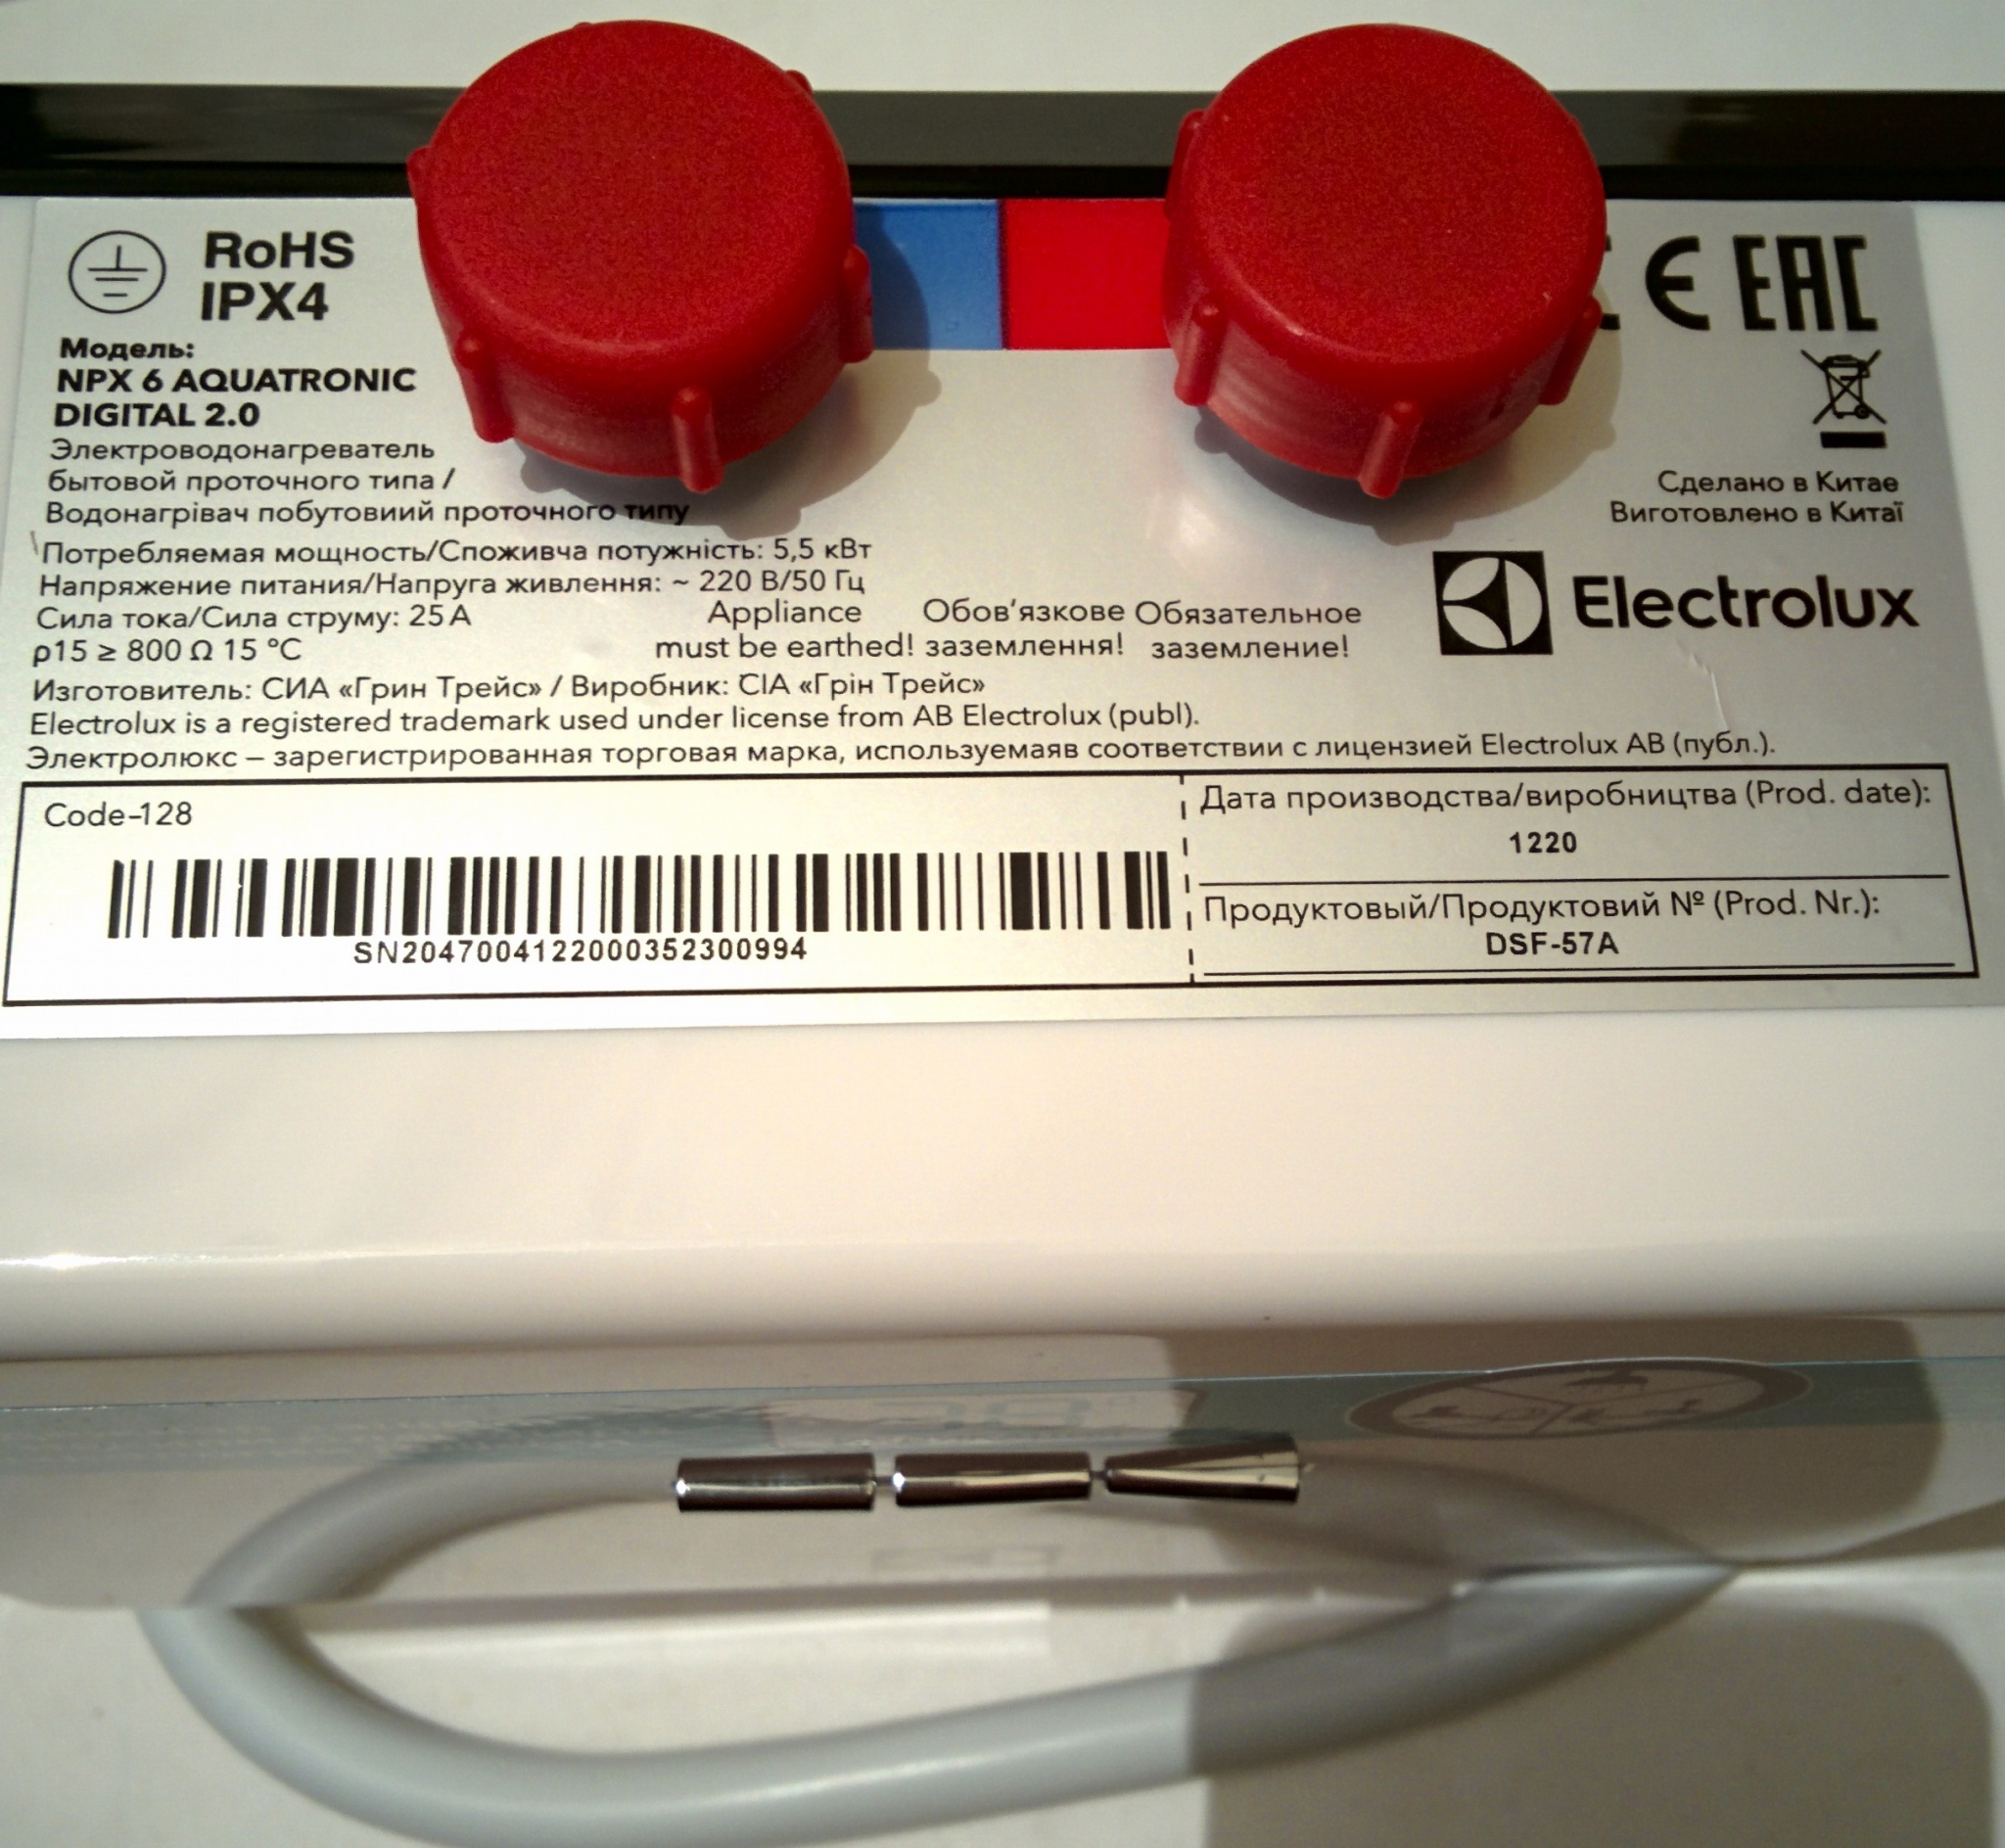 Electrolux aquatronic digital 6